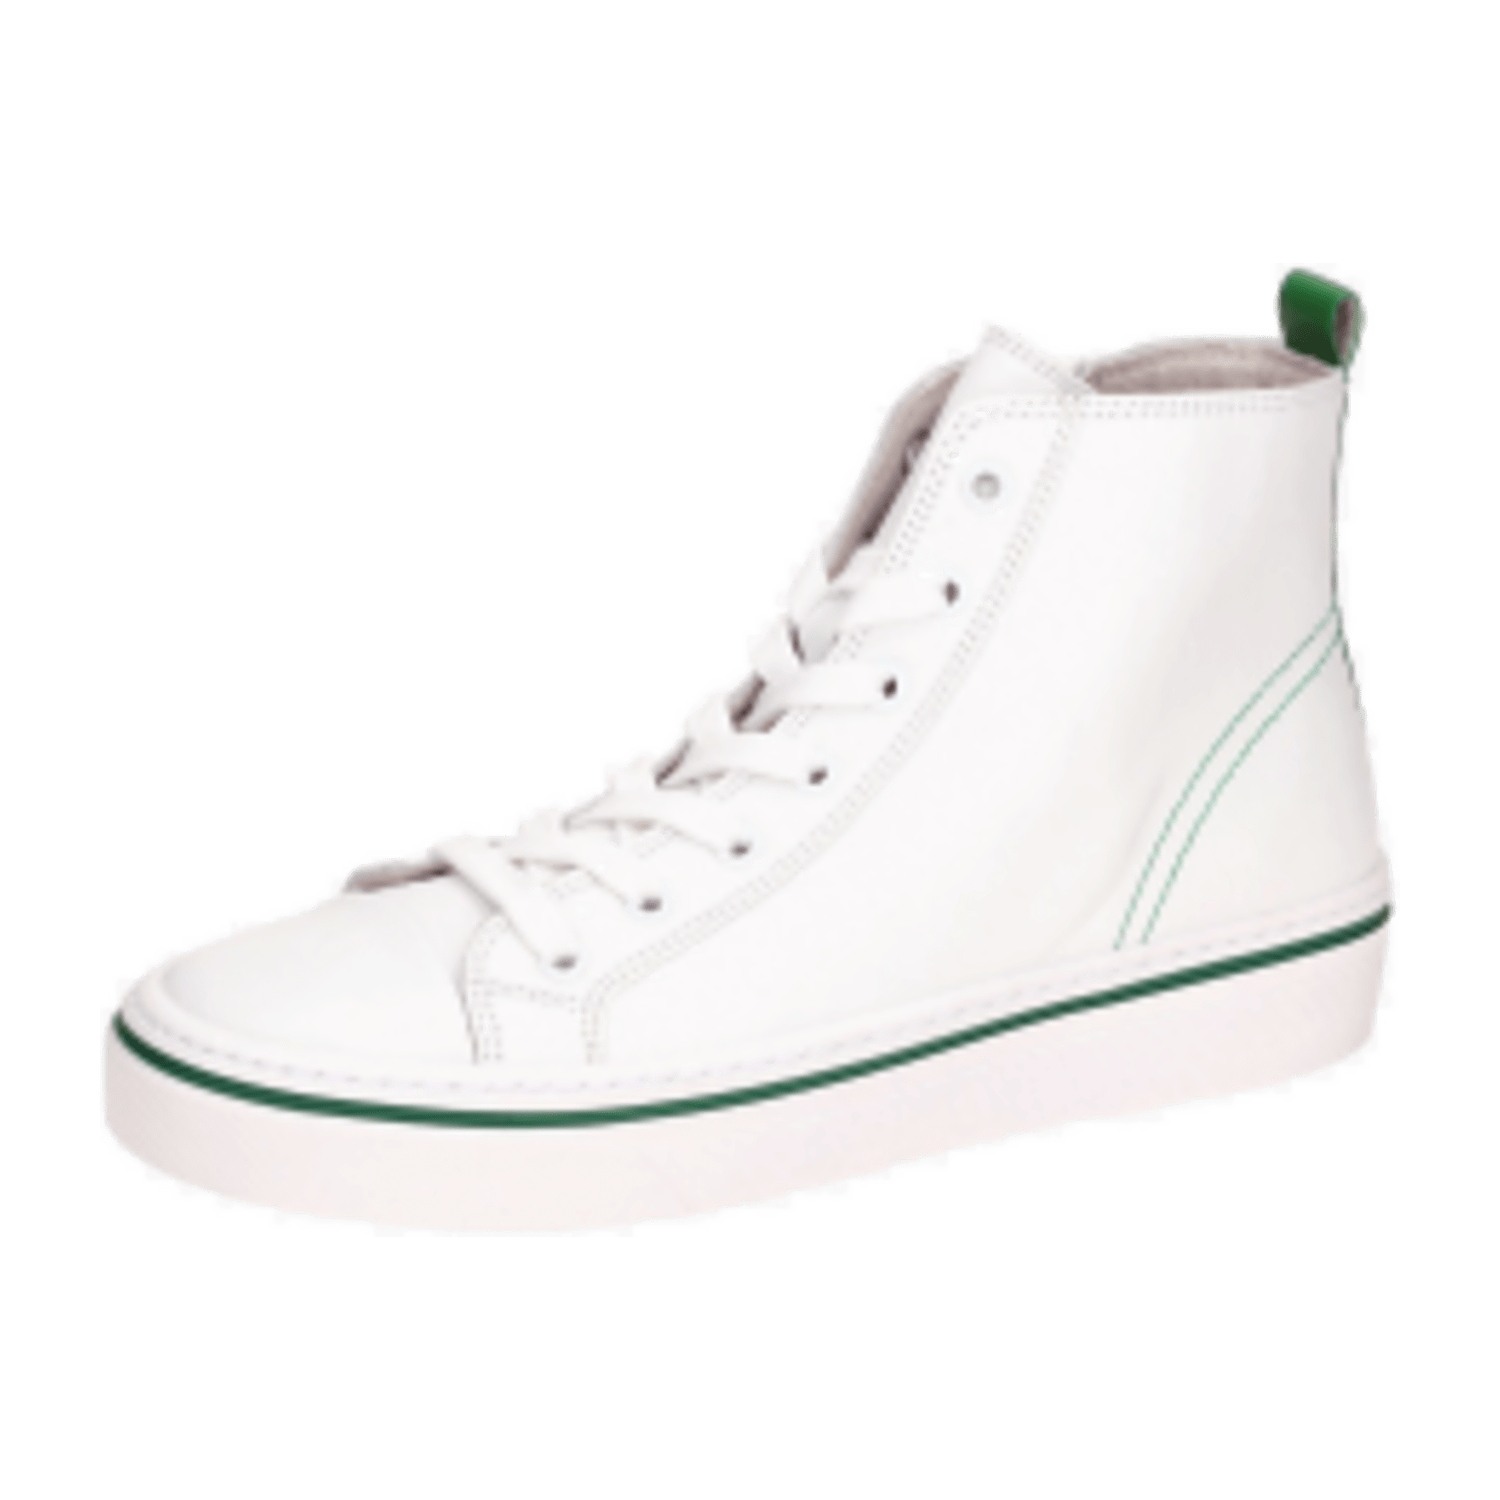 Gabor Mid Sneakers Stiefelette weiß grün Nappa 43.160.29